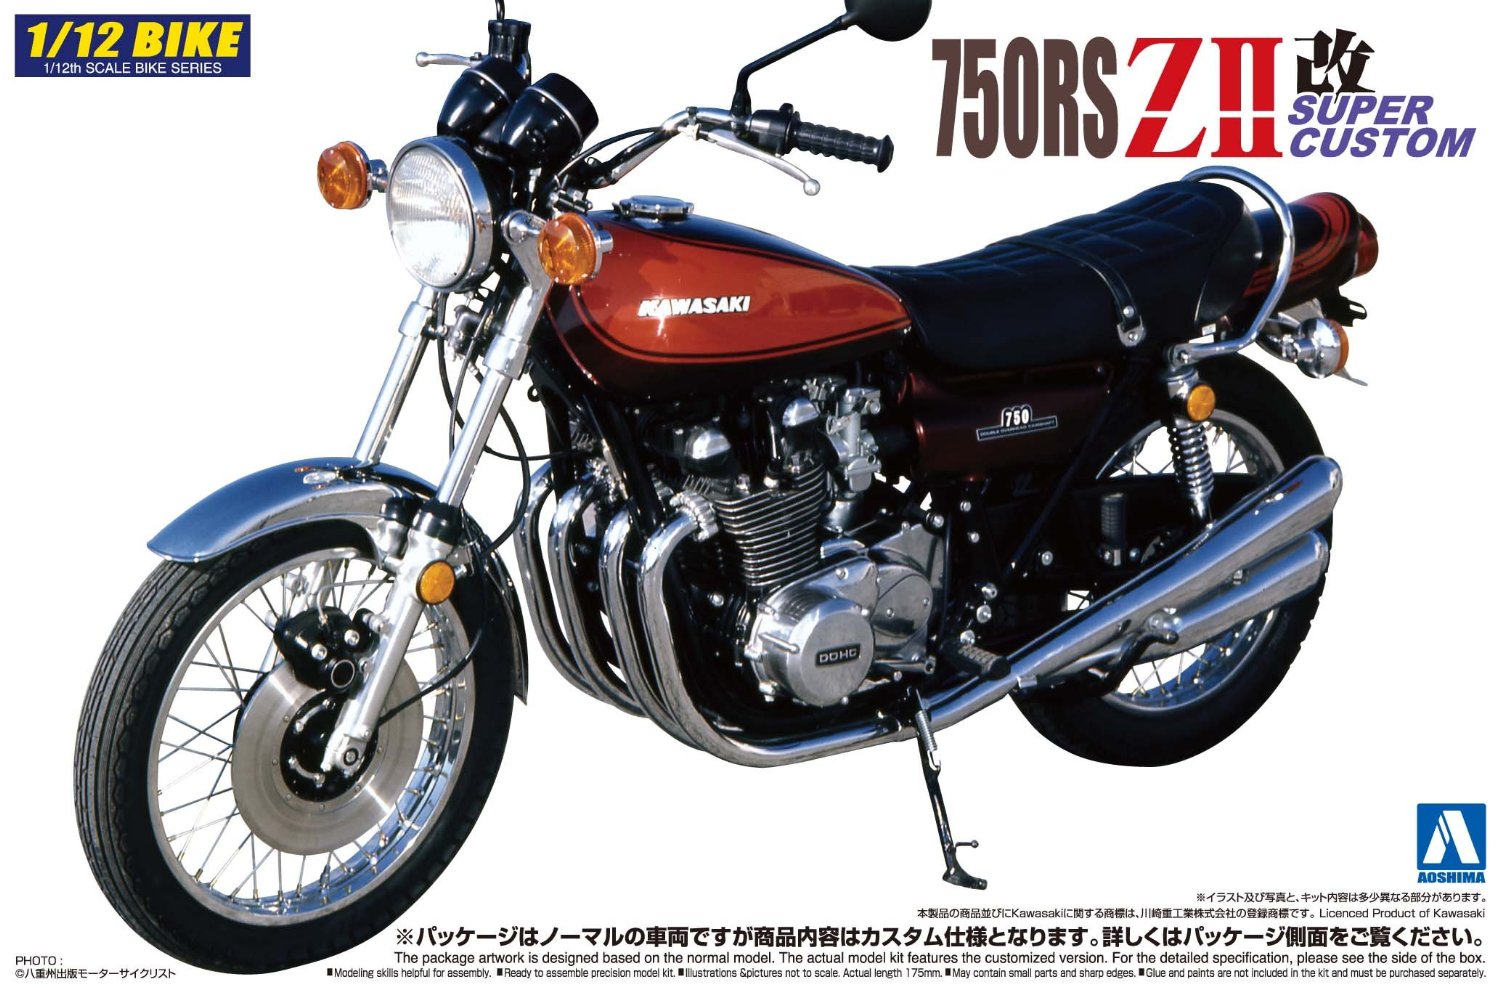 Kawasaki 750RS ZII Modified Super Custom